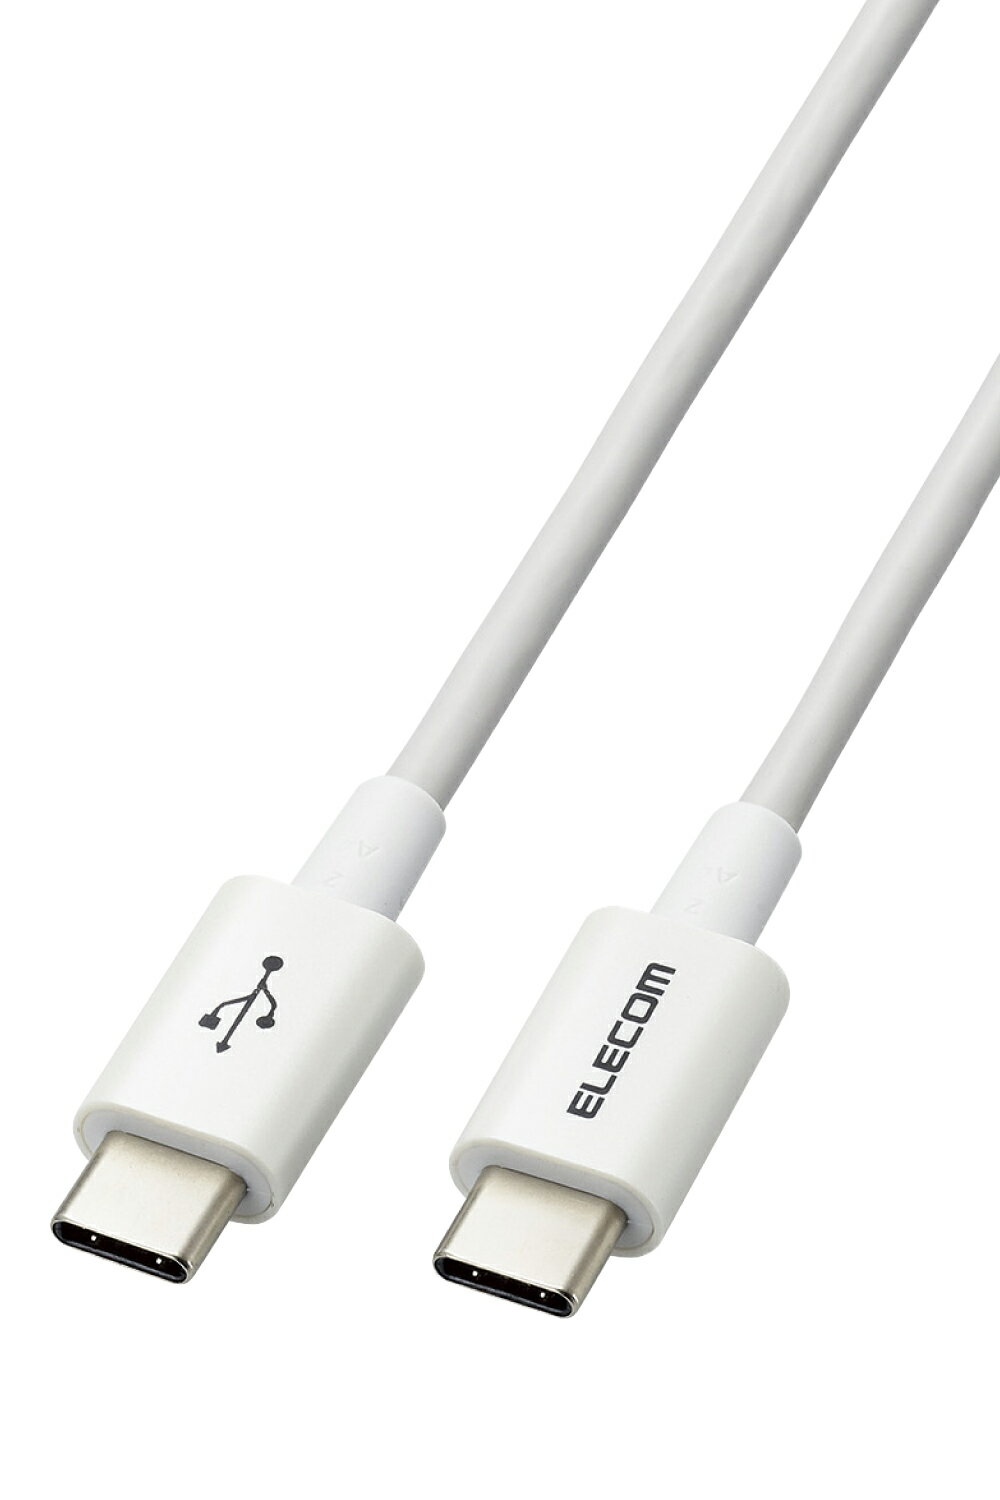 ELECOM（エレコム） タイプC ケーブル USB Type C to Type C 1.2m PD 60W対応 【 Chromebook Mac PC iPad Android Nintendo Switch 等 Type-C 機器対応 】 ホワイト MPA-CCYS12NWH